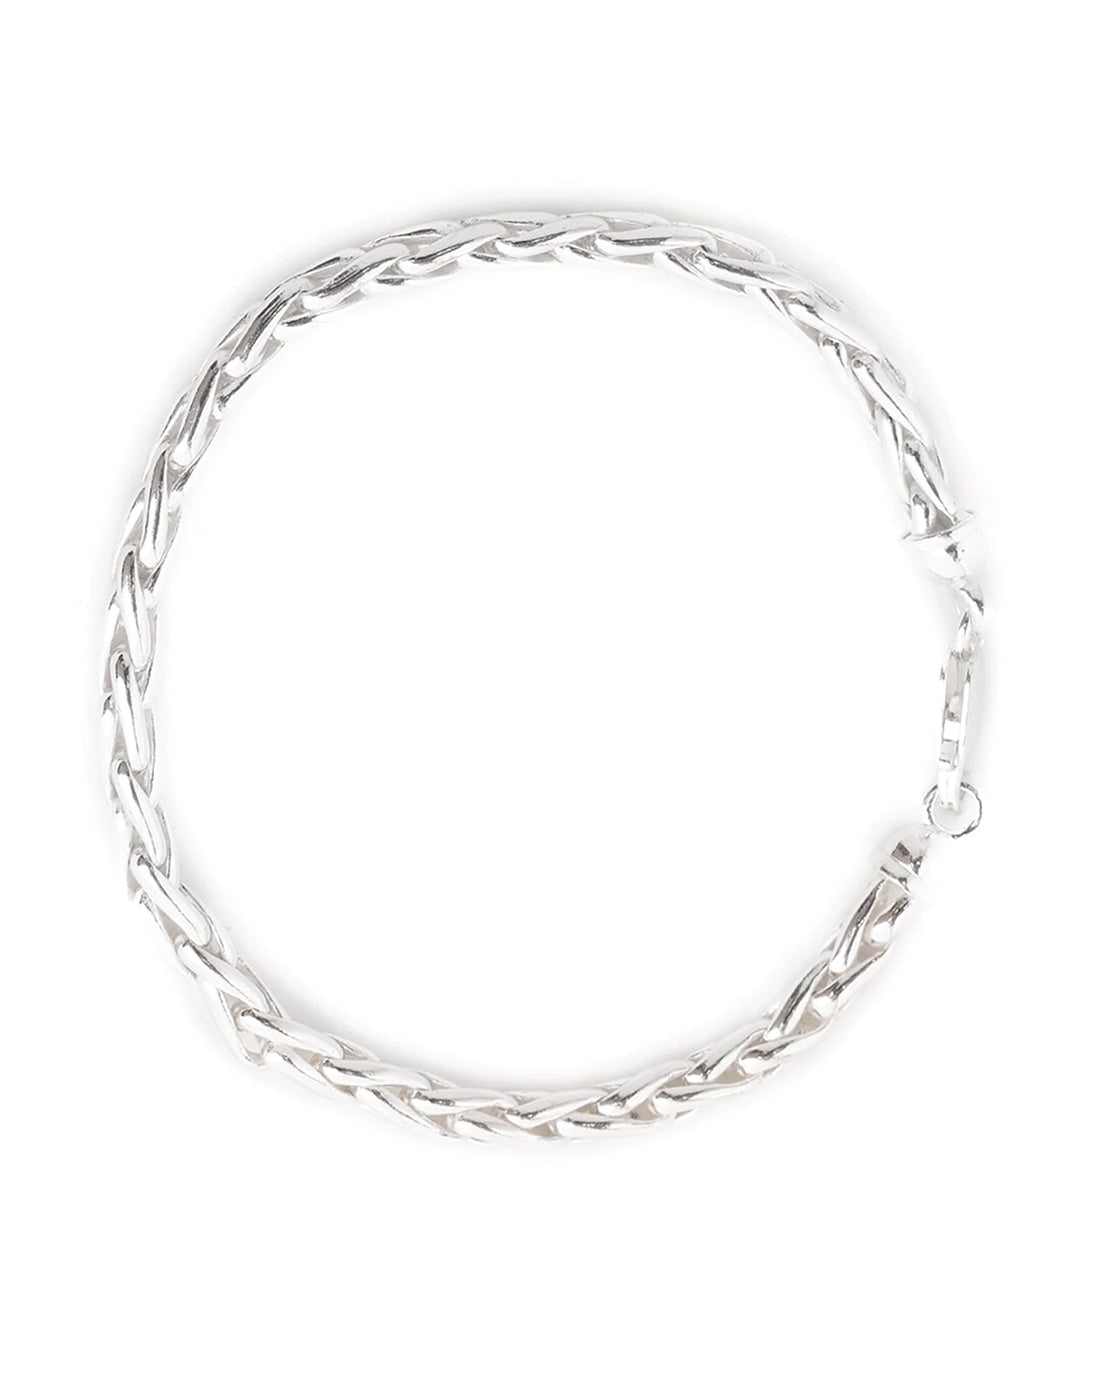 Carlton London Rhodium Plated Link Bracelet for Men